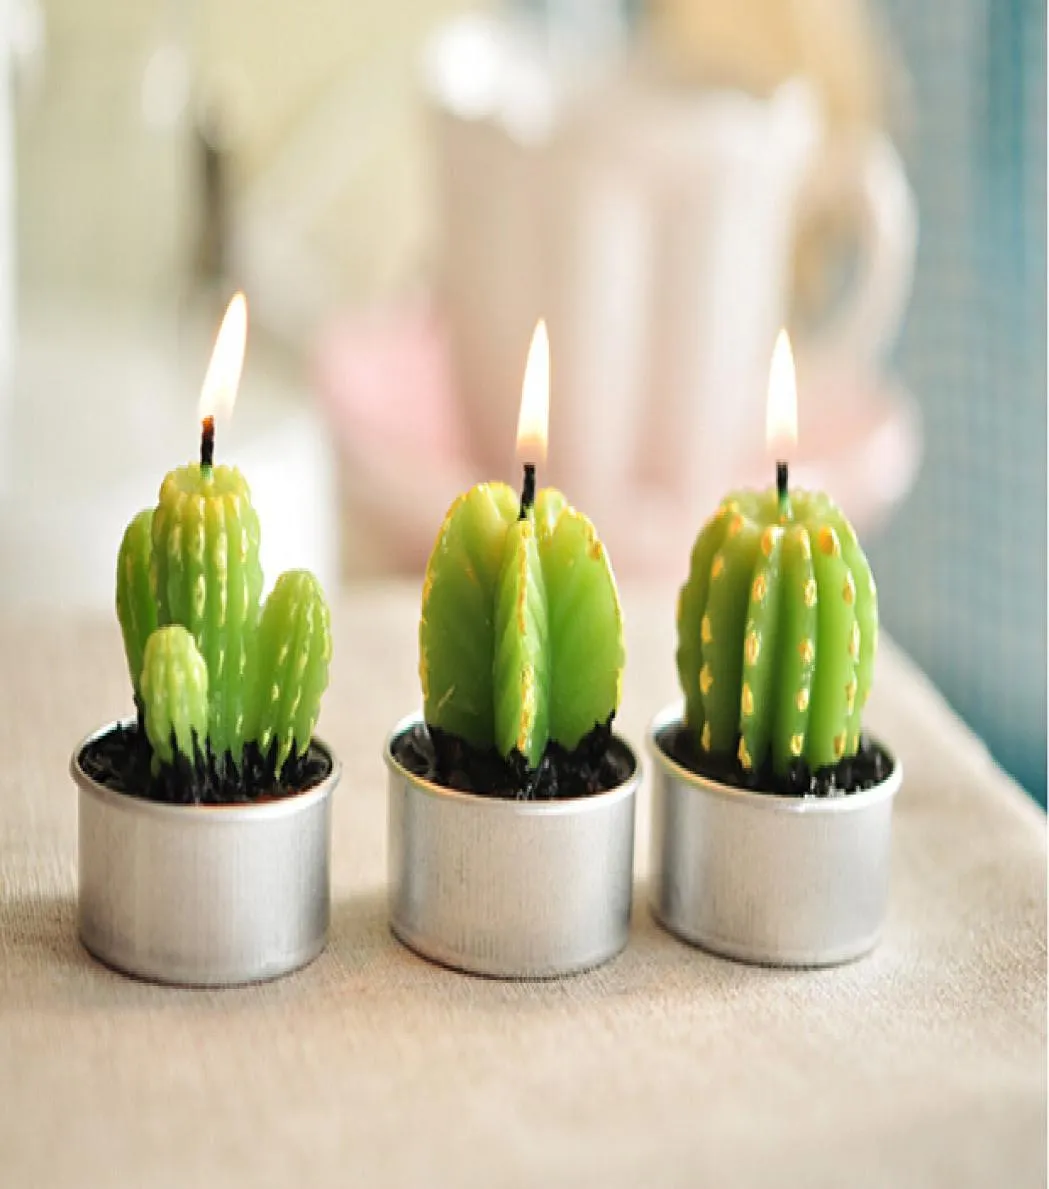 Whole Rare Mini Cactus Candles Plant Decor Home Table Garden 6pcslot kawaii Decoration Factory expert design Quali3953279